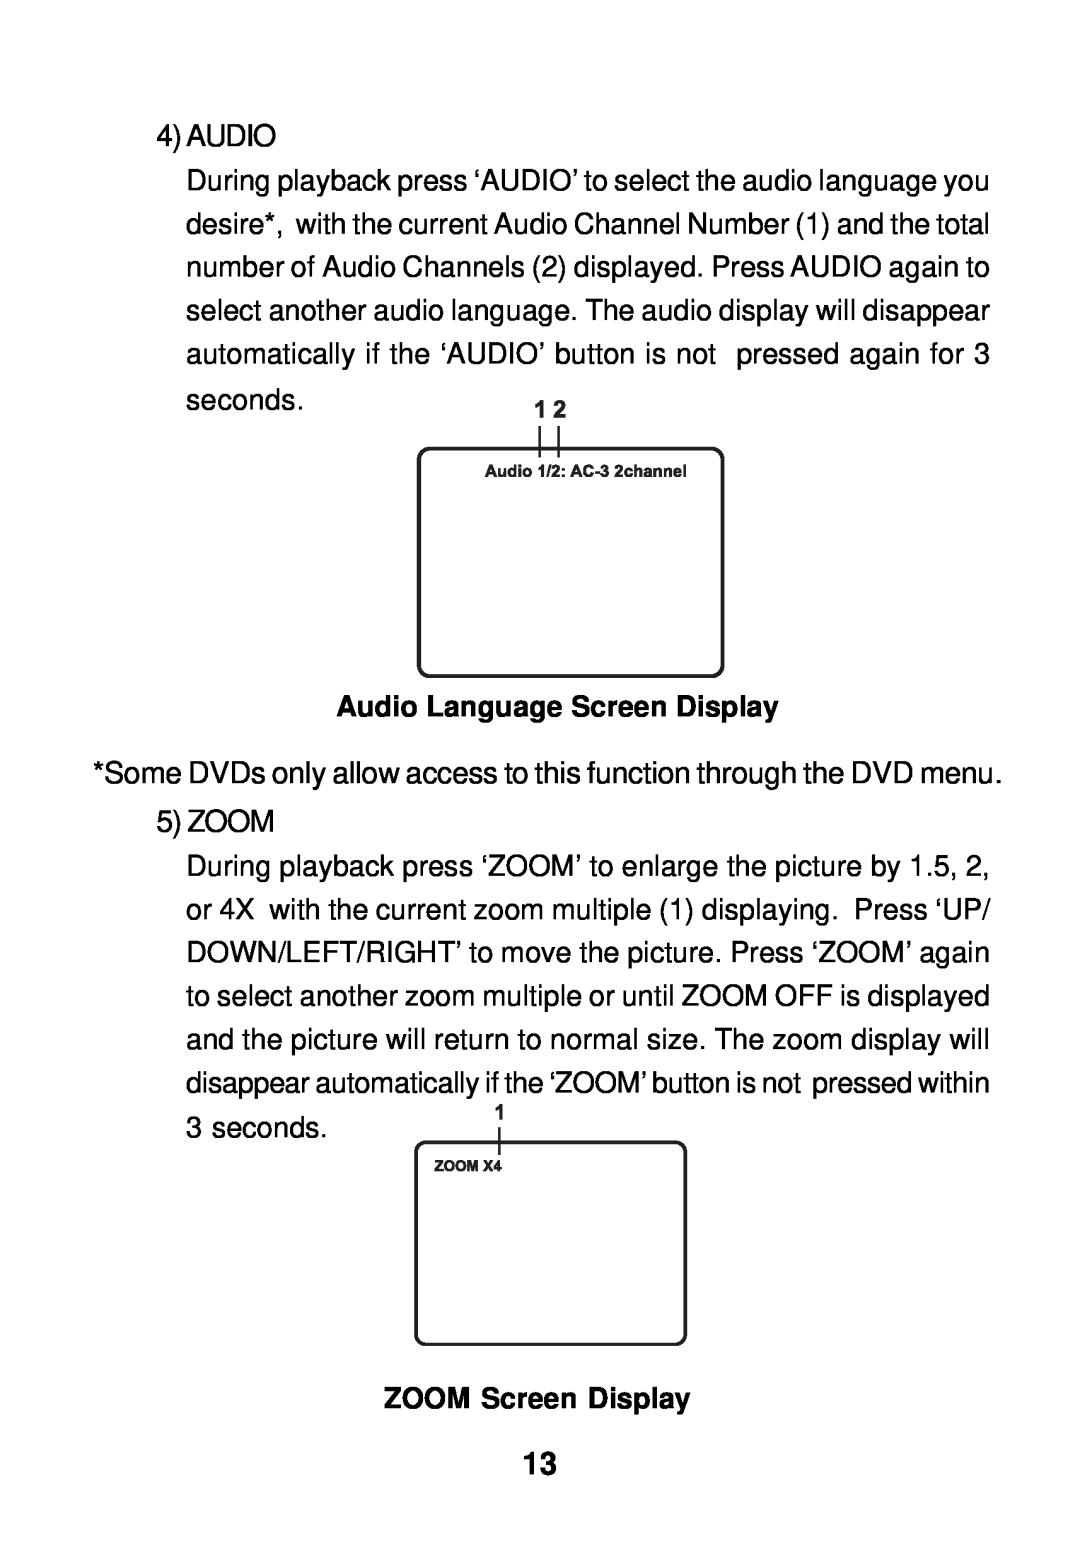 Audiovox AVD300 owner manual Audio Language Screen Display, ZOOM Screen Display 